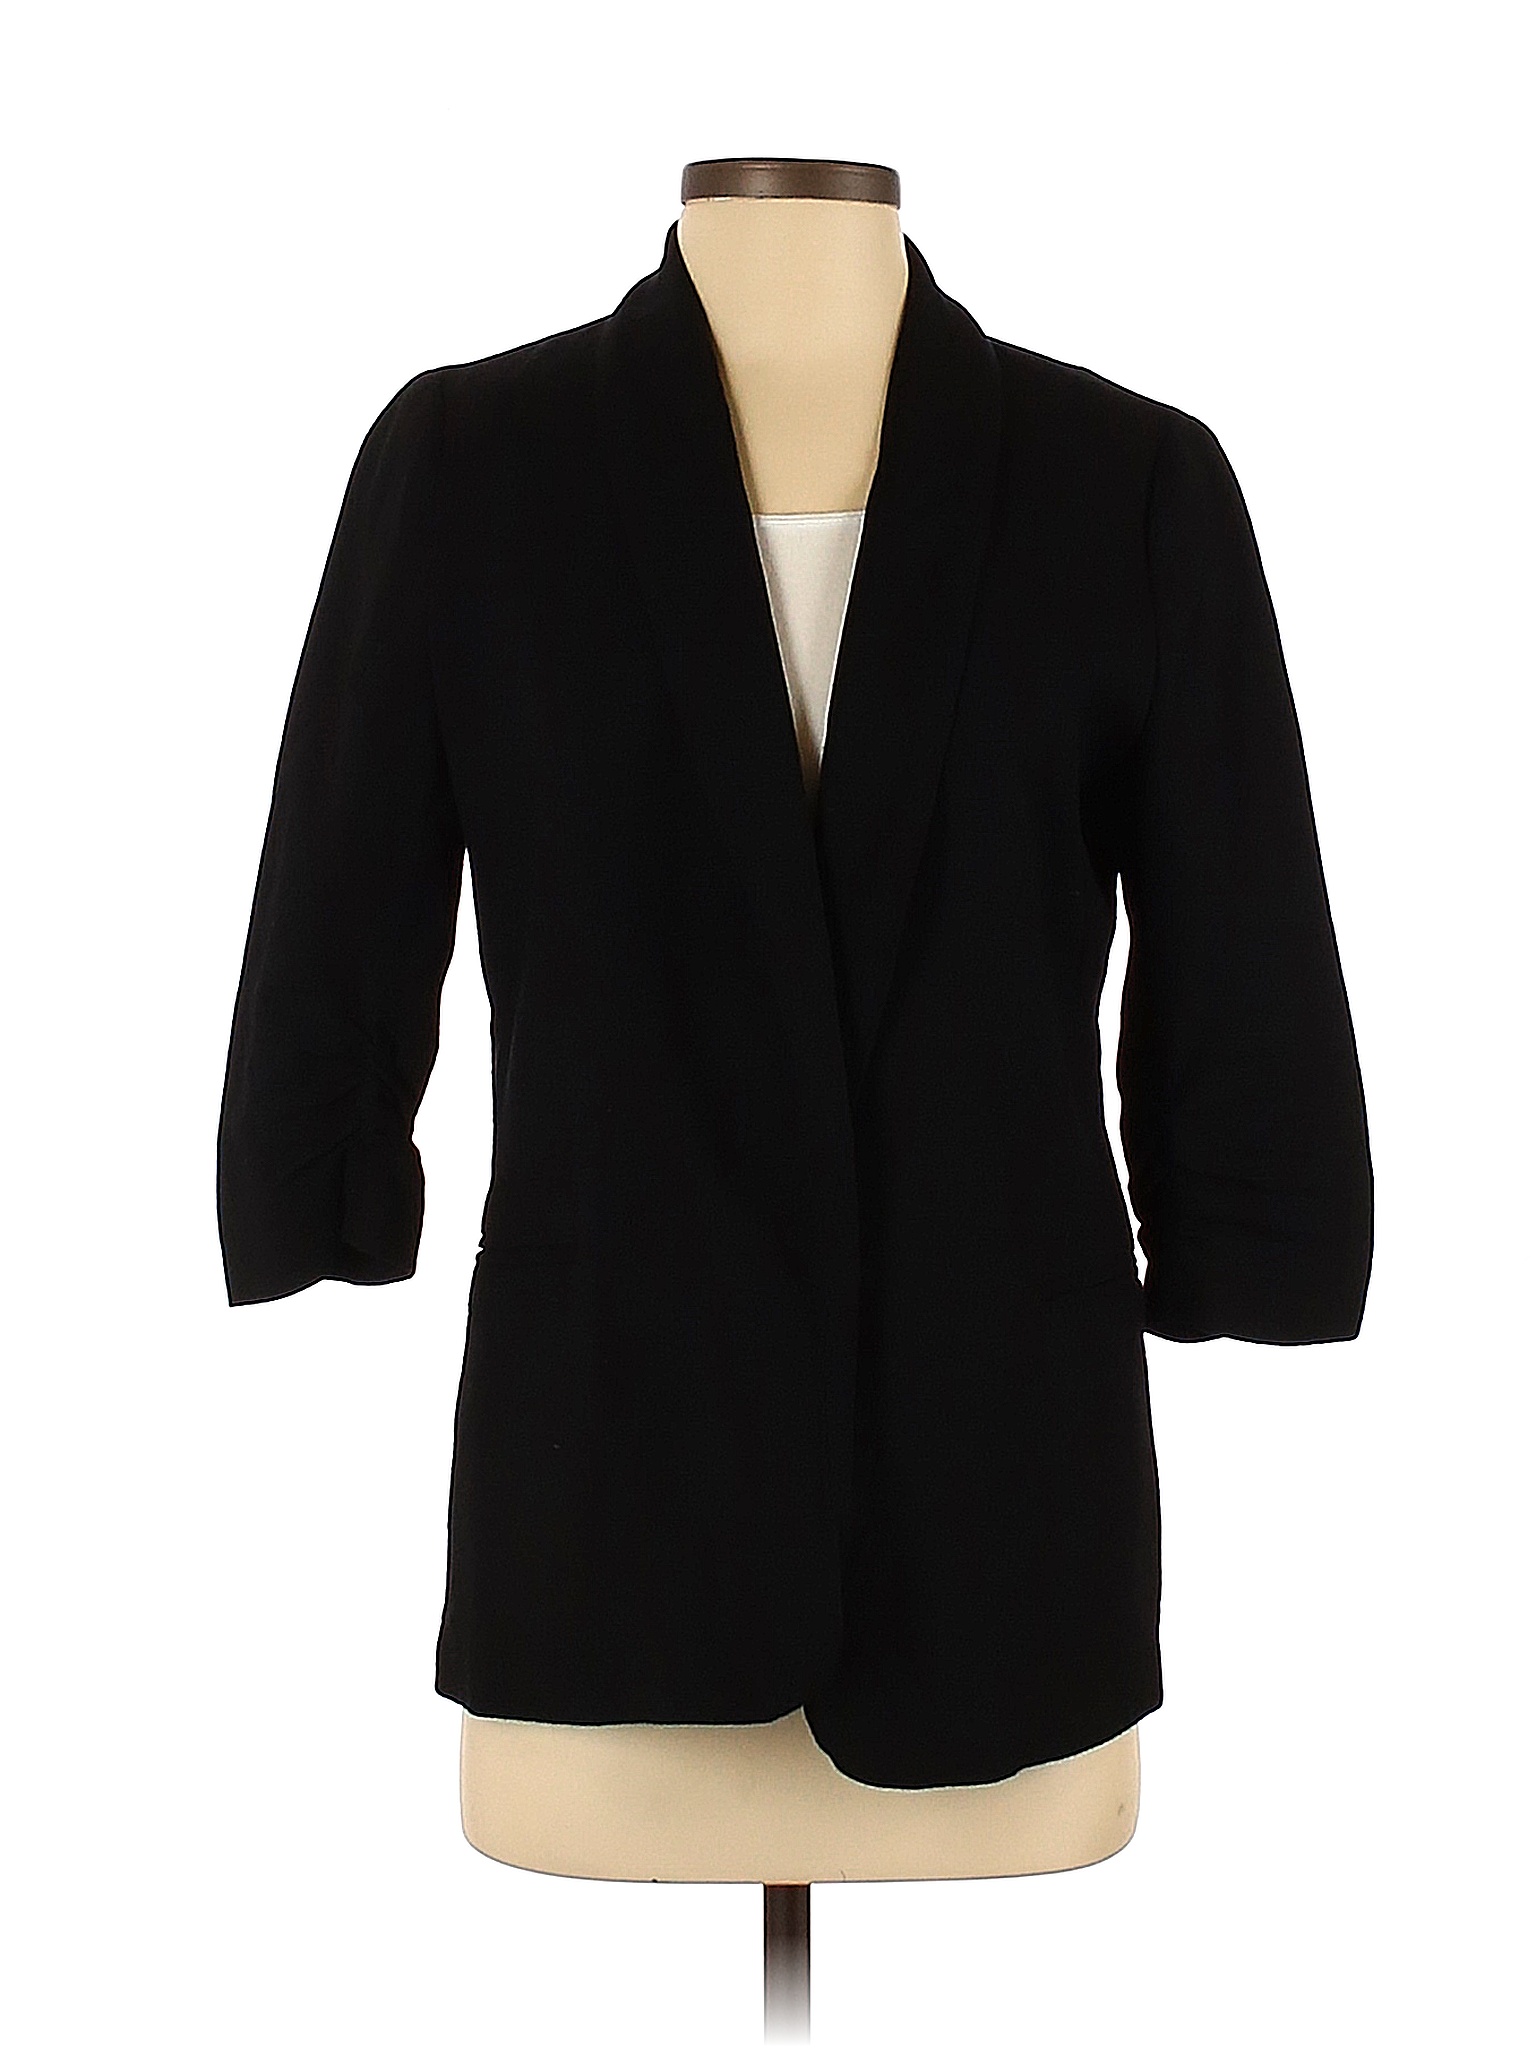 PREMISE 100% Rayon Solid Black Blazer Size S - 74% off | thredUP